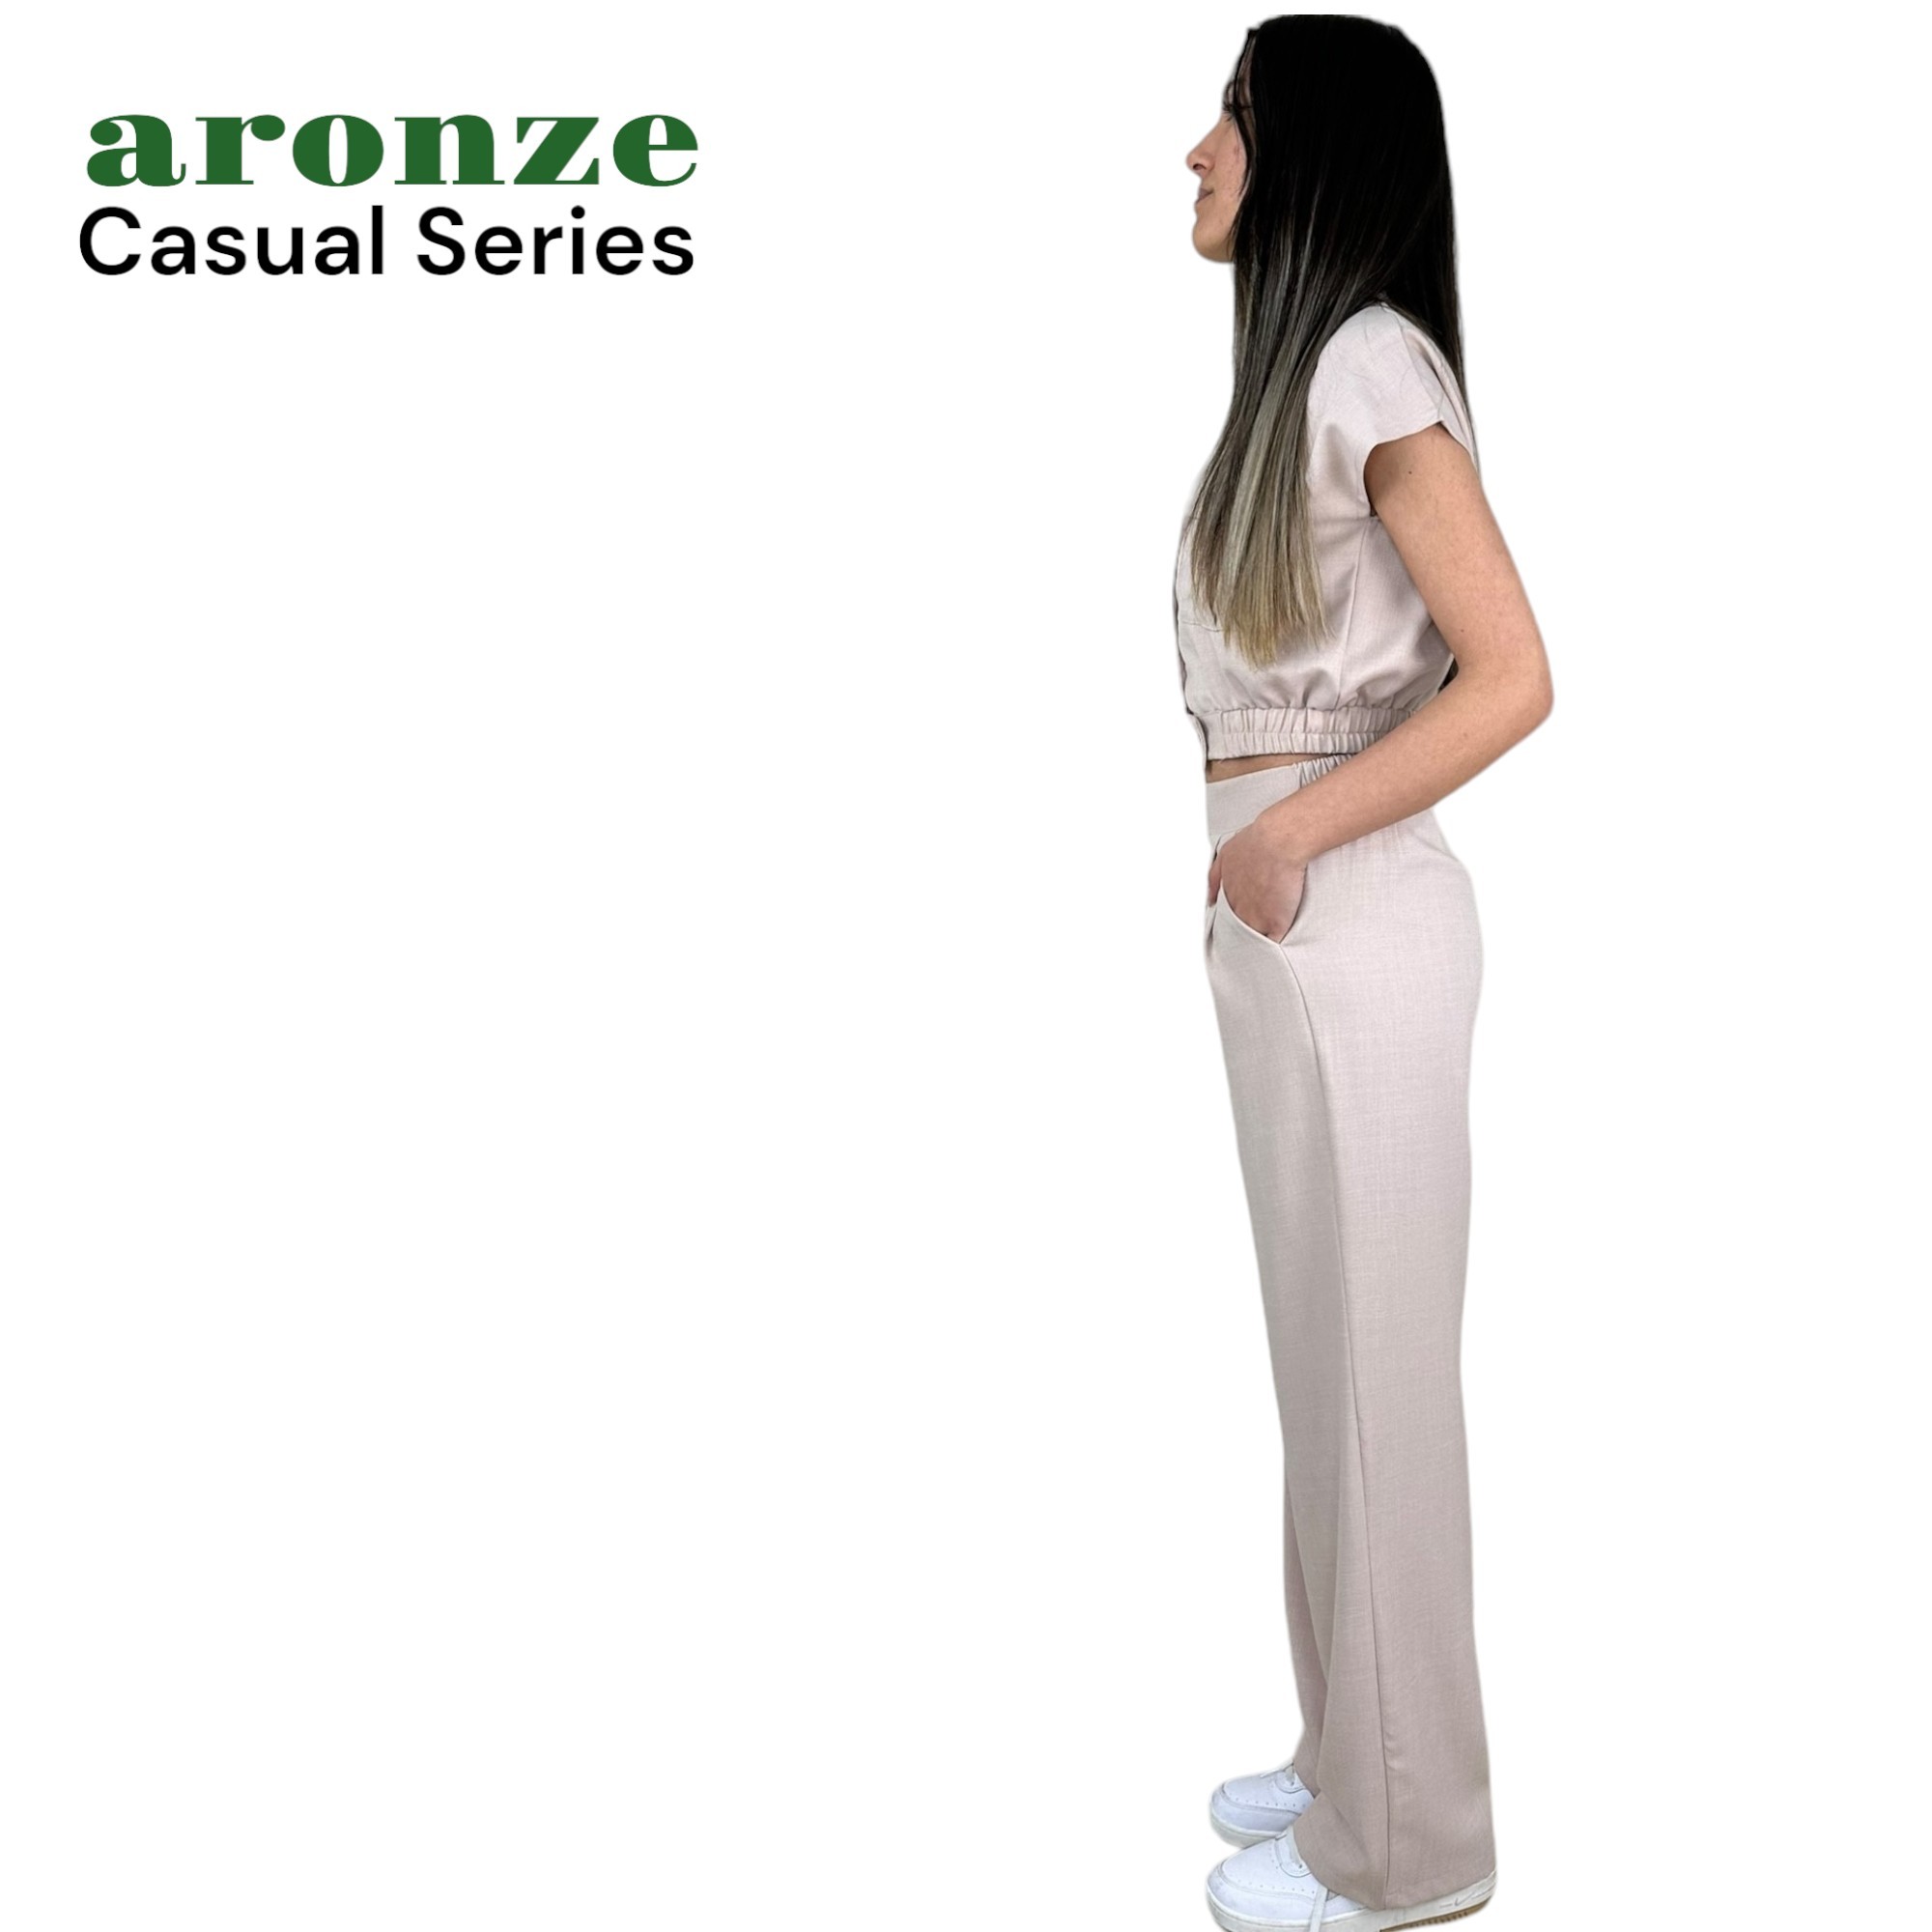 Aronze Casual Series %100 Organik Türk Pamuğu Crop Pantolon Bej Renk Takım